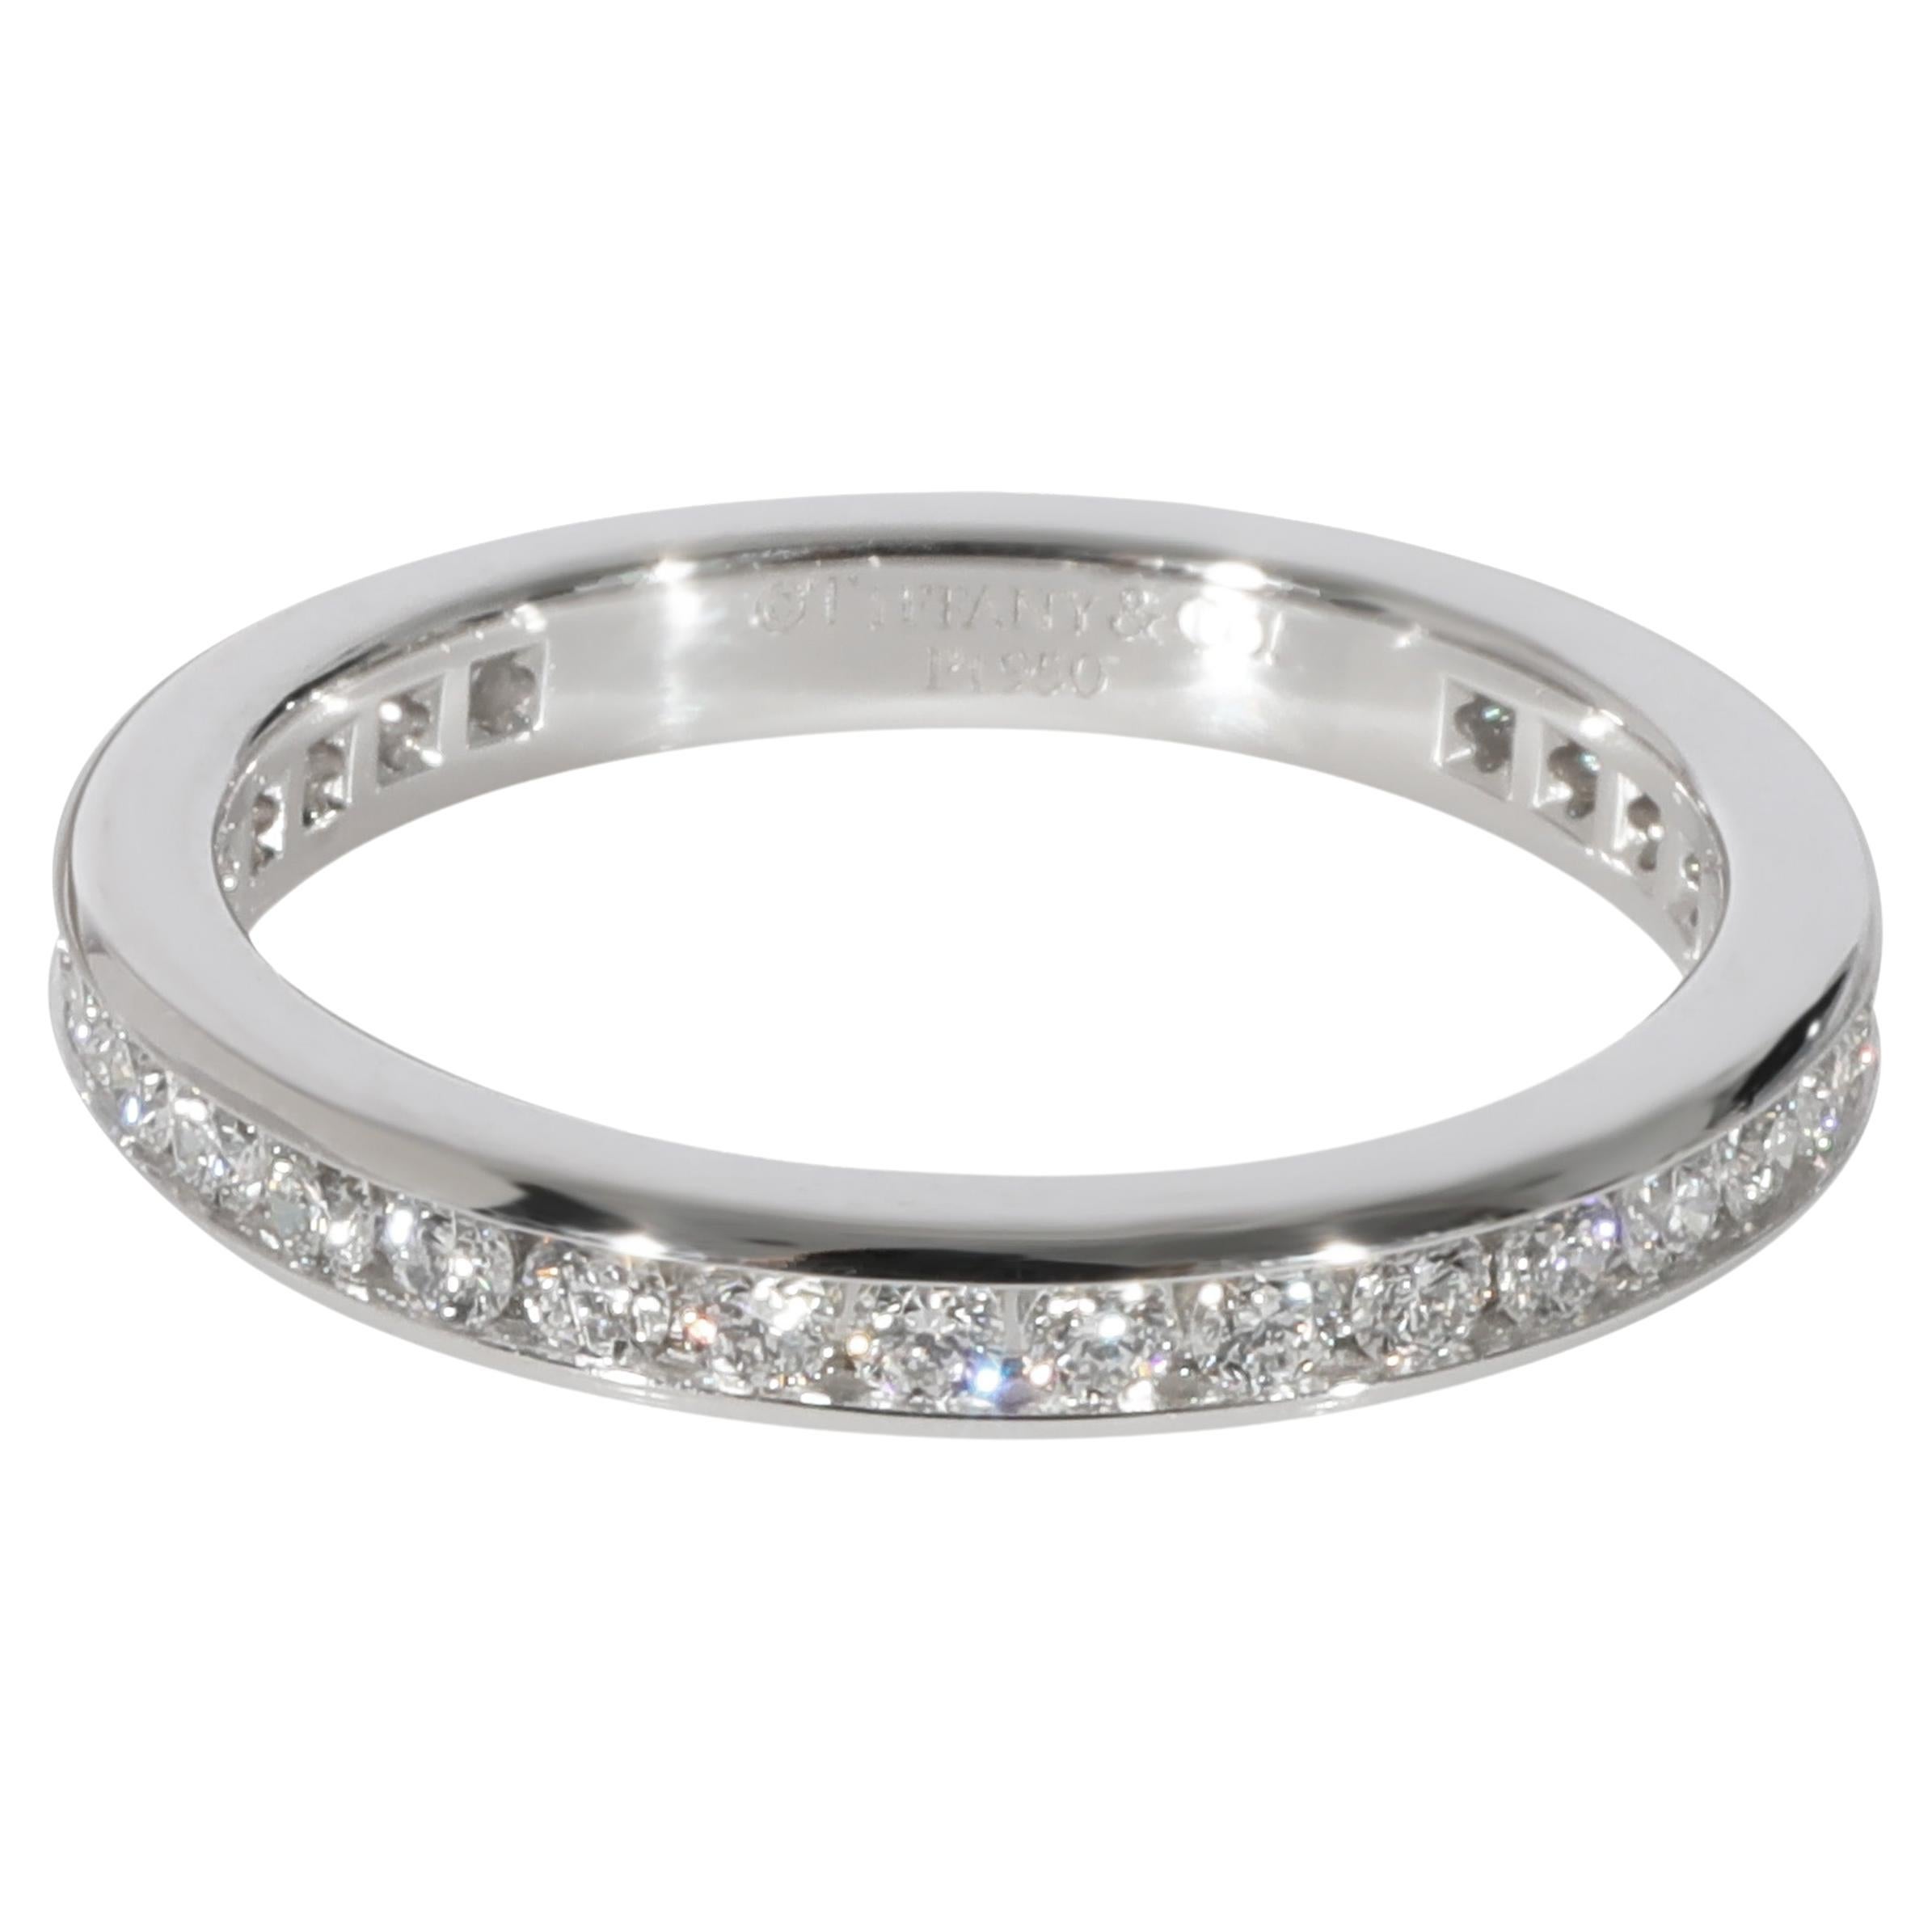 Tiffany & Co. Eternity-Ring aus Platin mit 0,56 Karat Diamanten in Kanalfassung